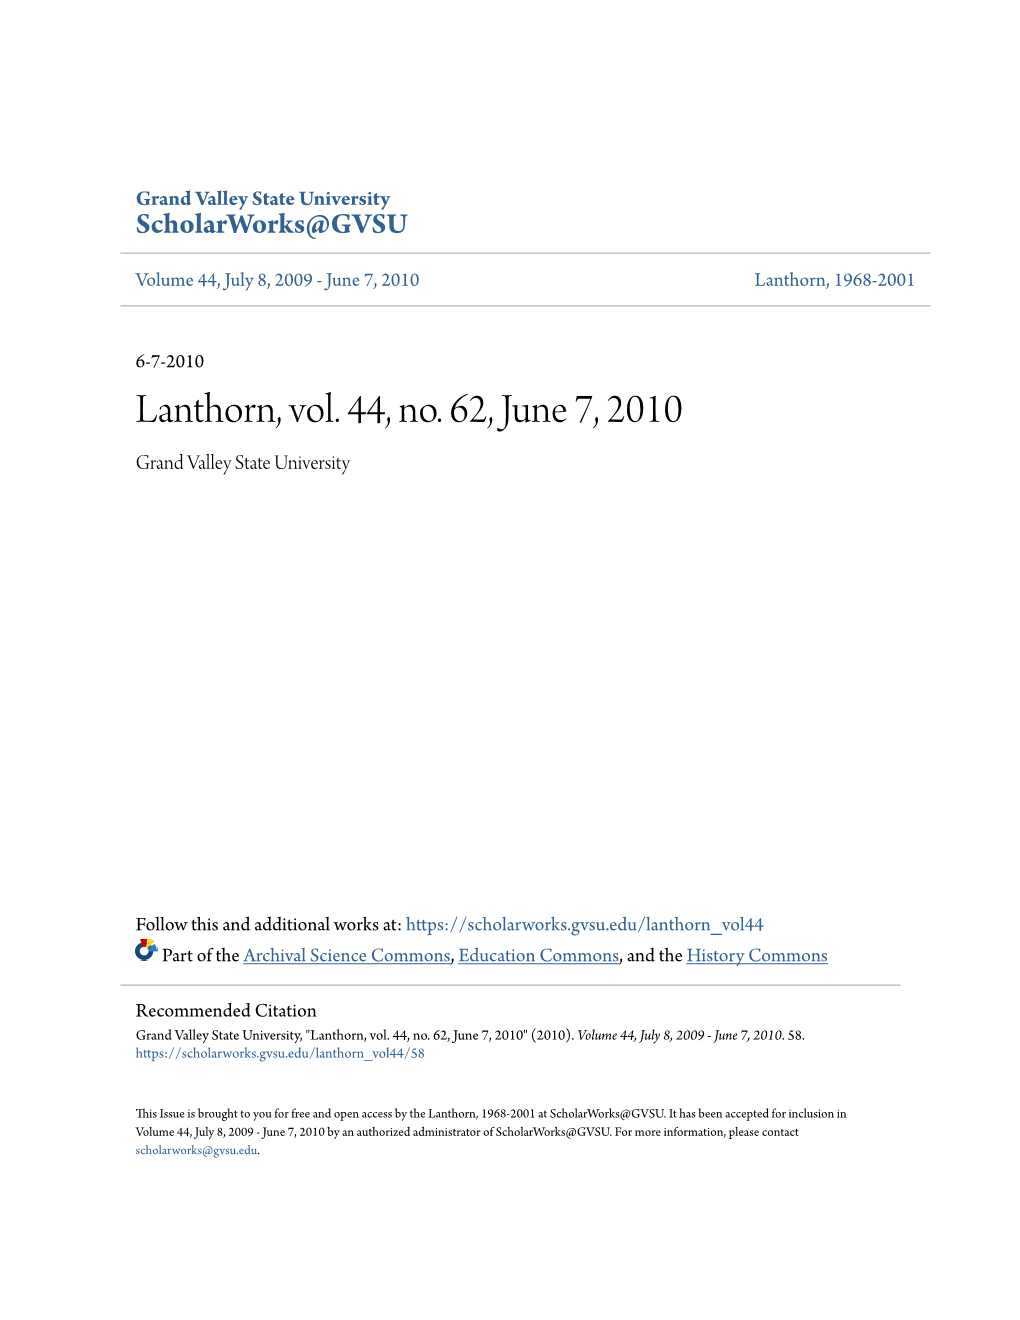 Lanthorn, Vol. 44, No. 62, June 7, 2010 Grand Valley State University